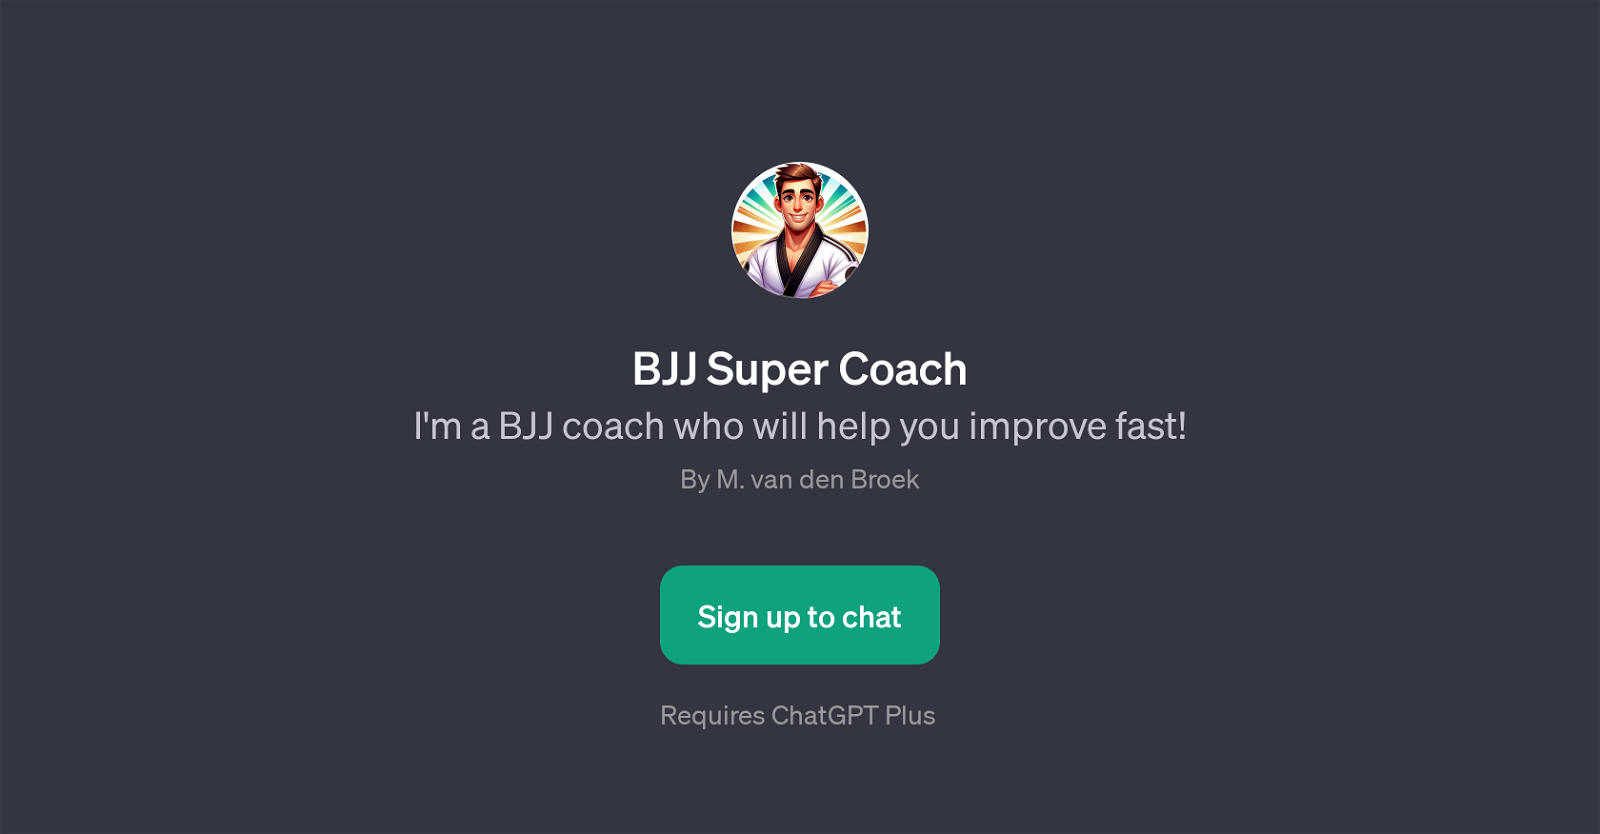 BJJ Super Coach website